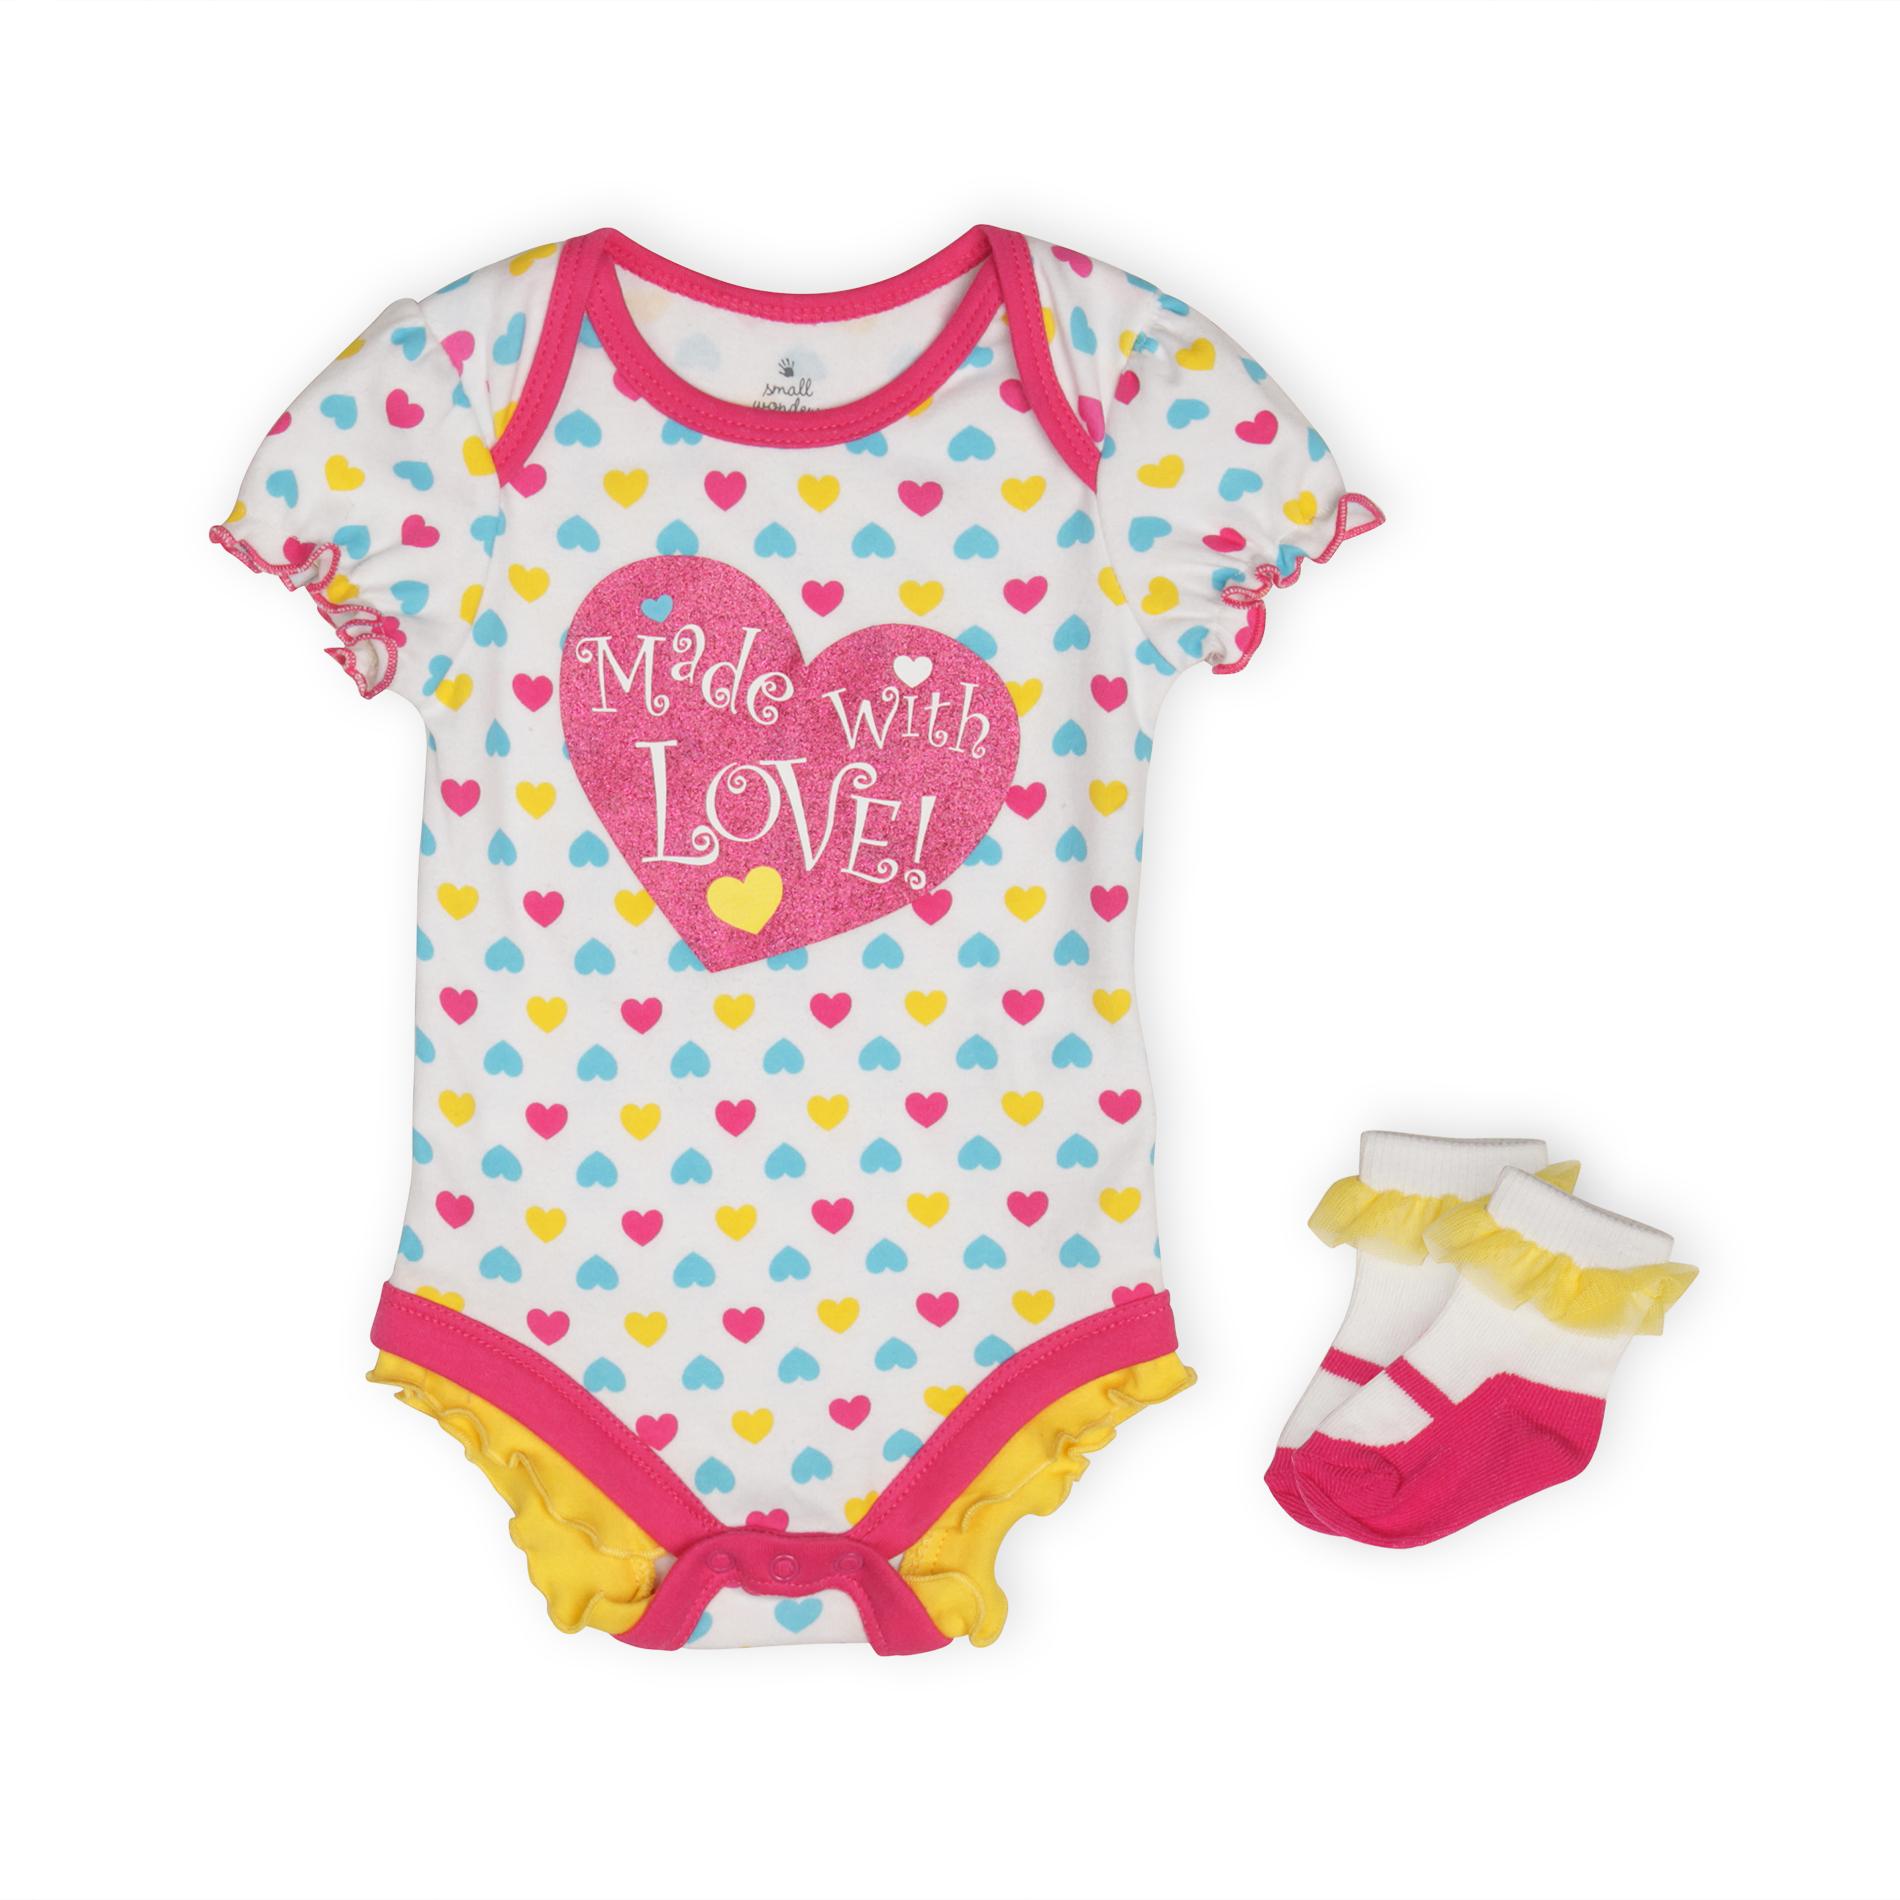 Small Wonders Newborn Girl's Bodysuit & Ruffle Socks - Heart Print